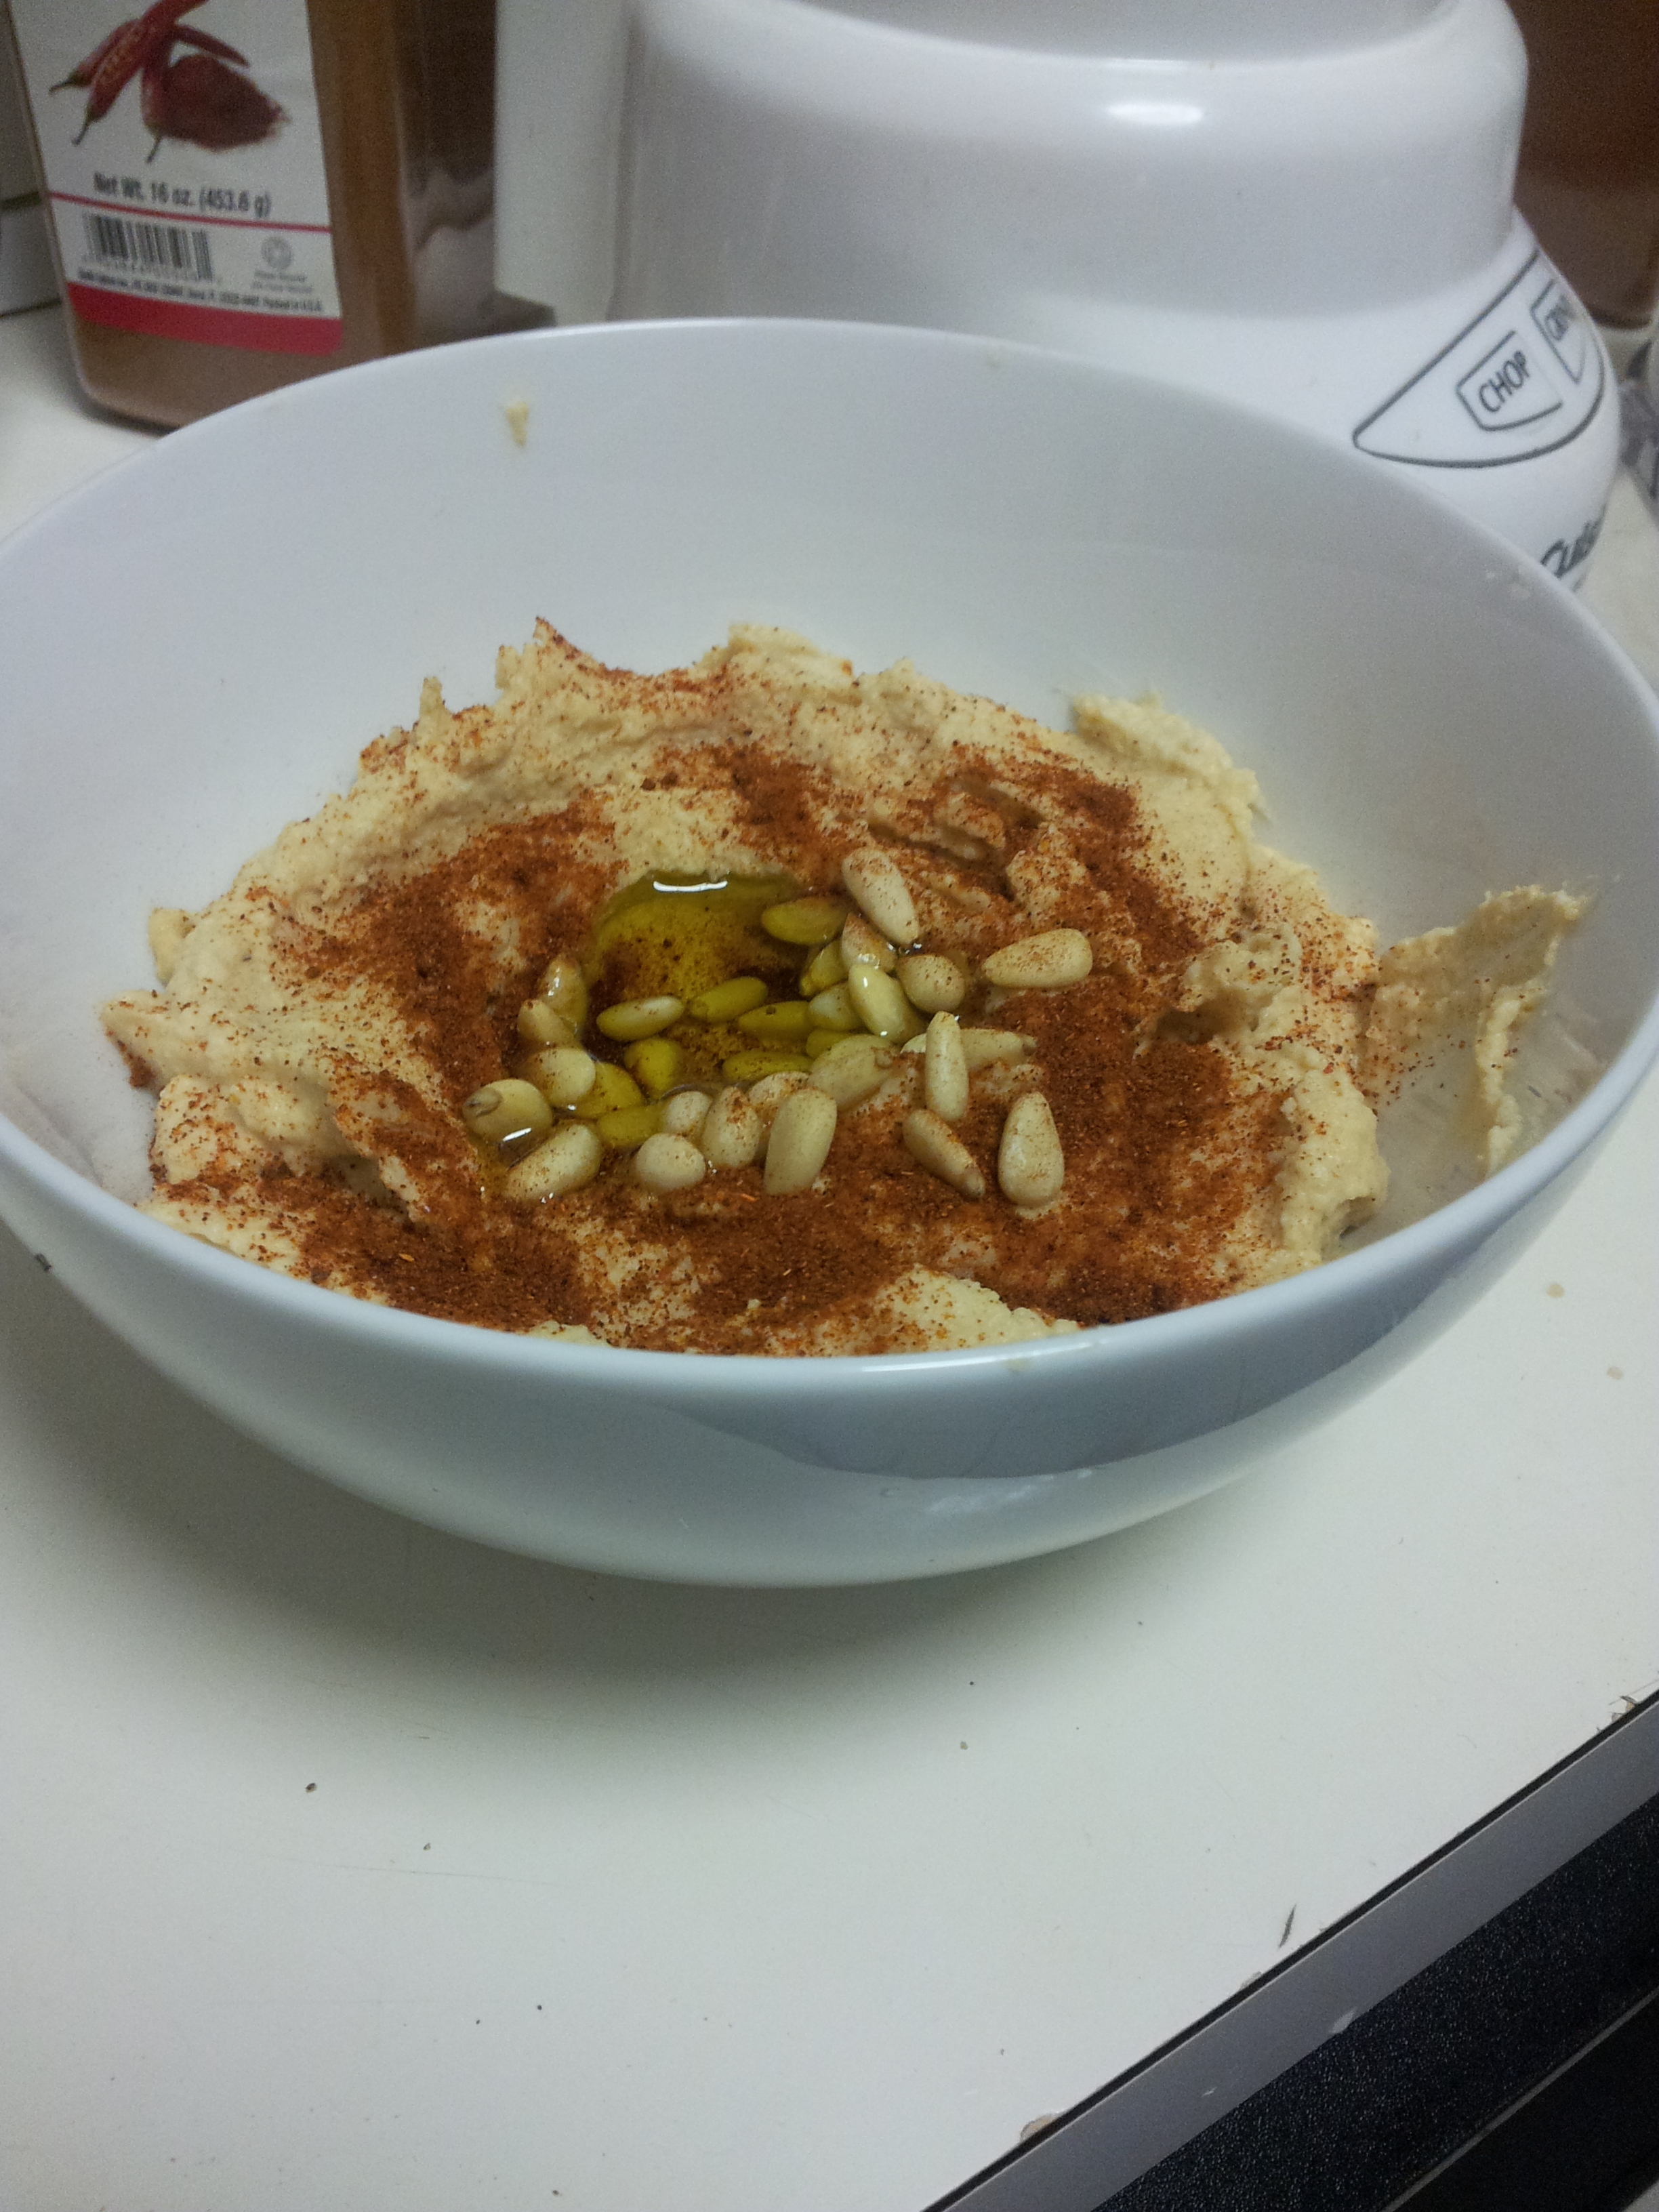 Post-session snack: Homemade hummus